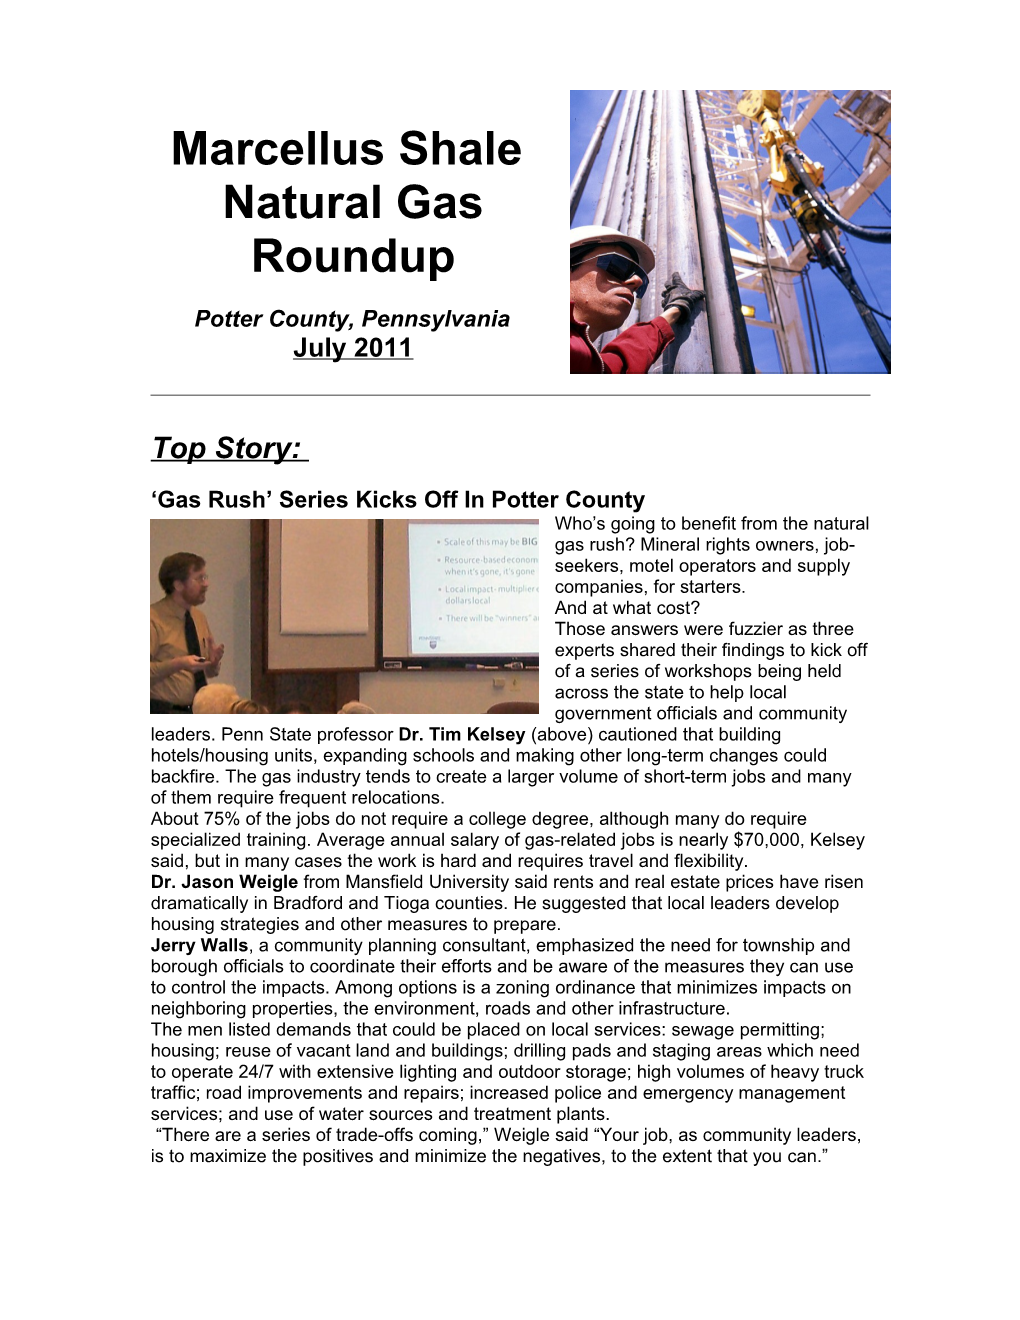 Natural Gas Roundup